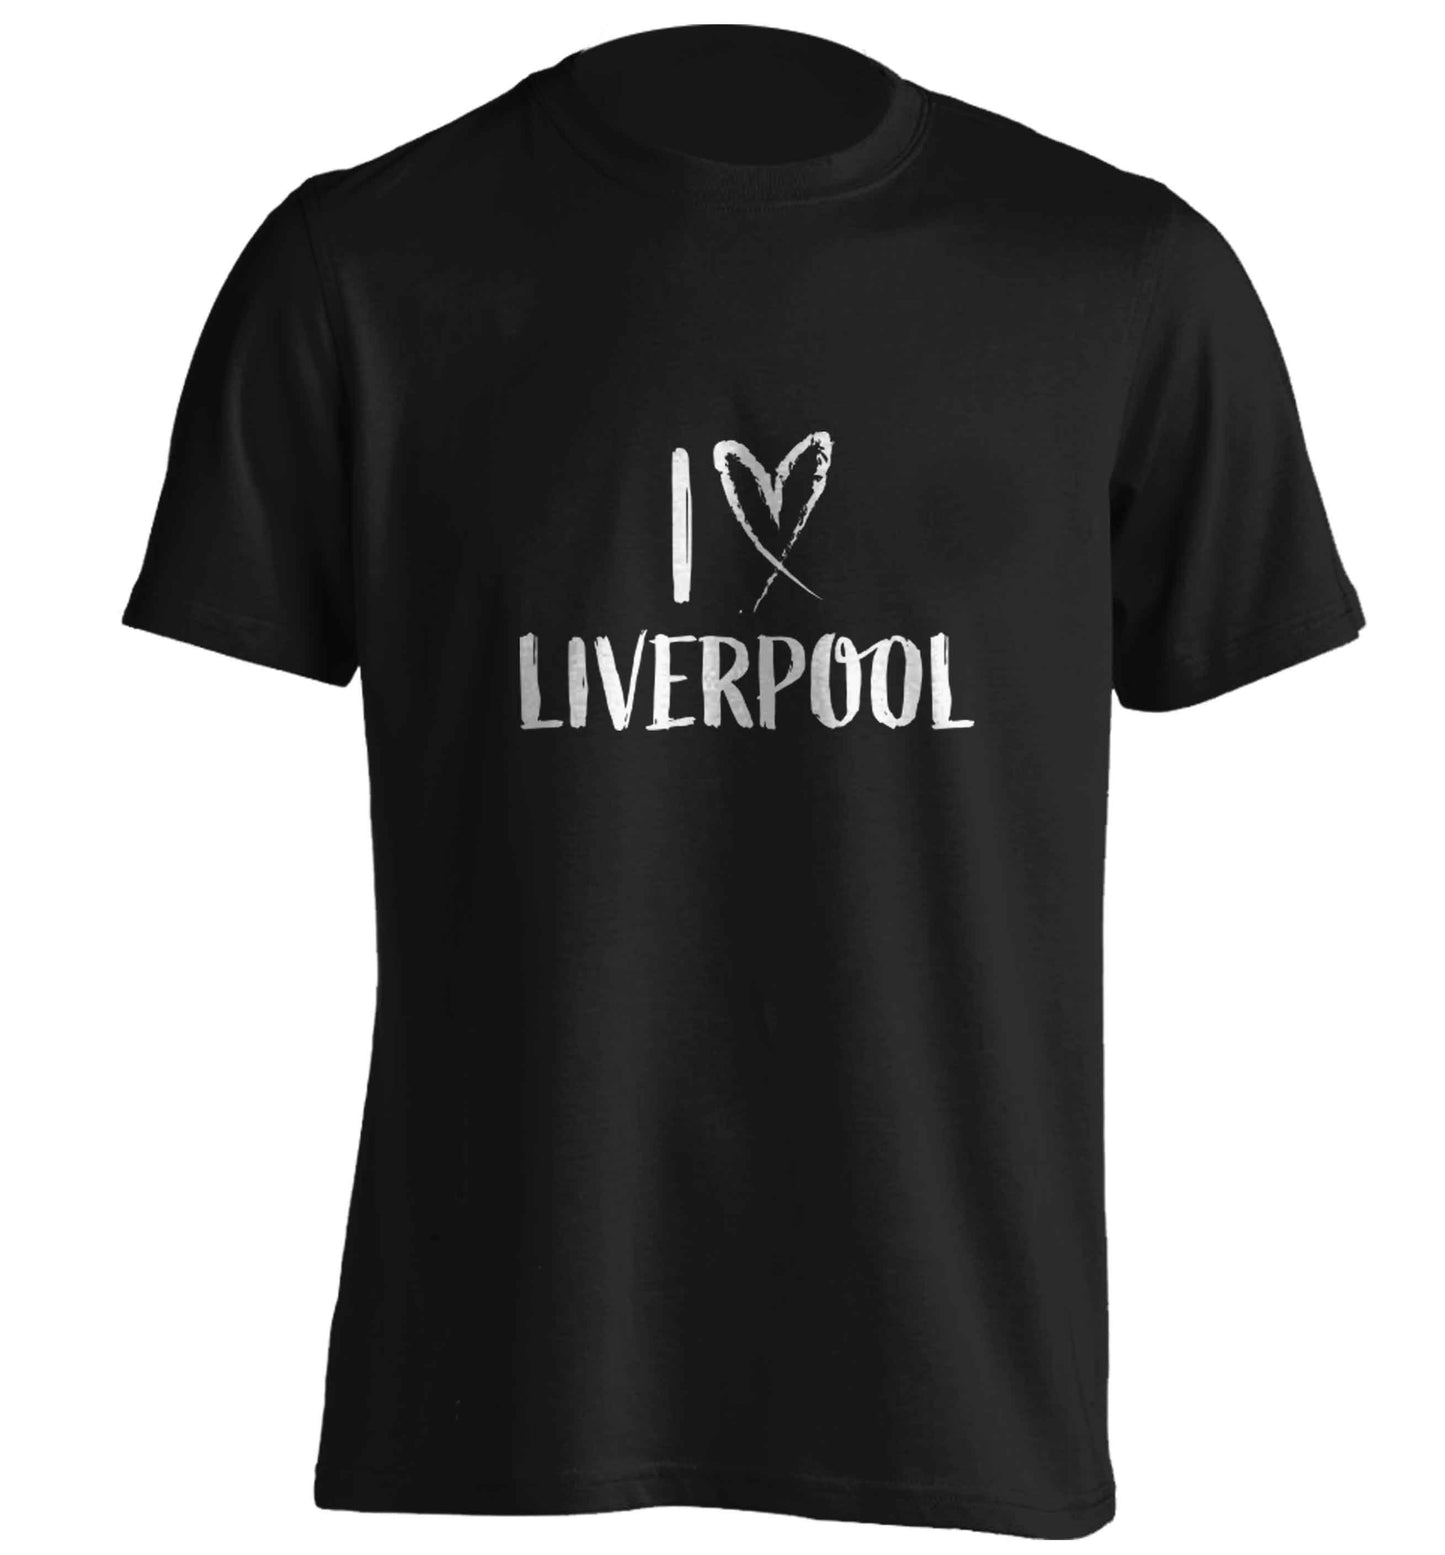 I love Liverpool adults unisex black Tshirt 2XL